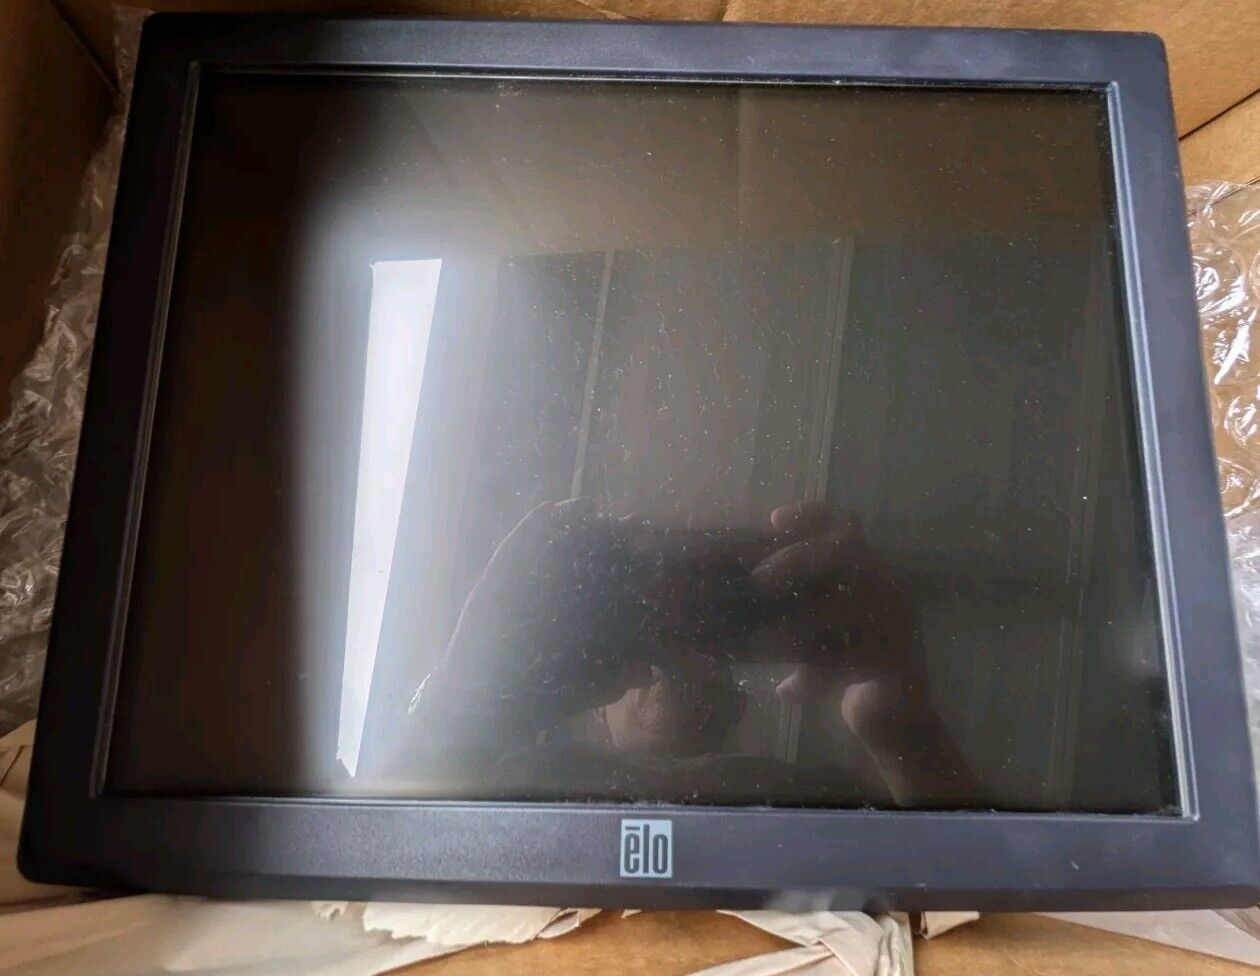 2 Elo touchscreen monitors 15